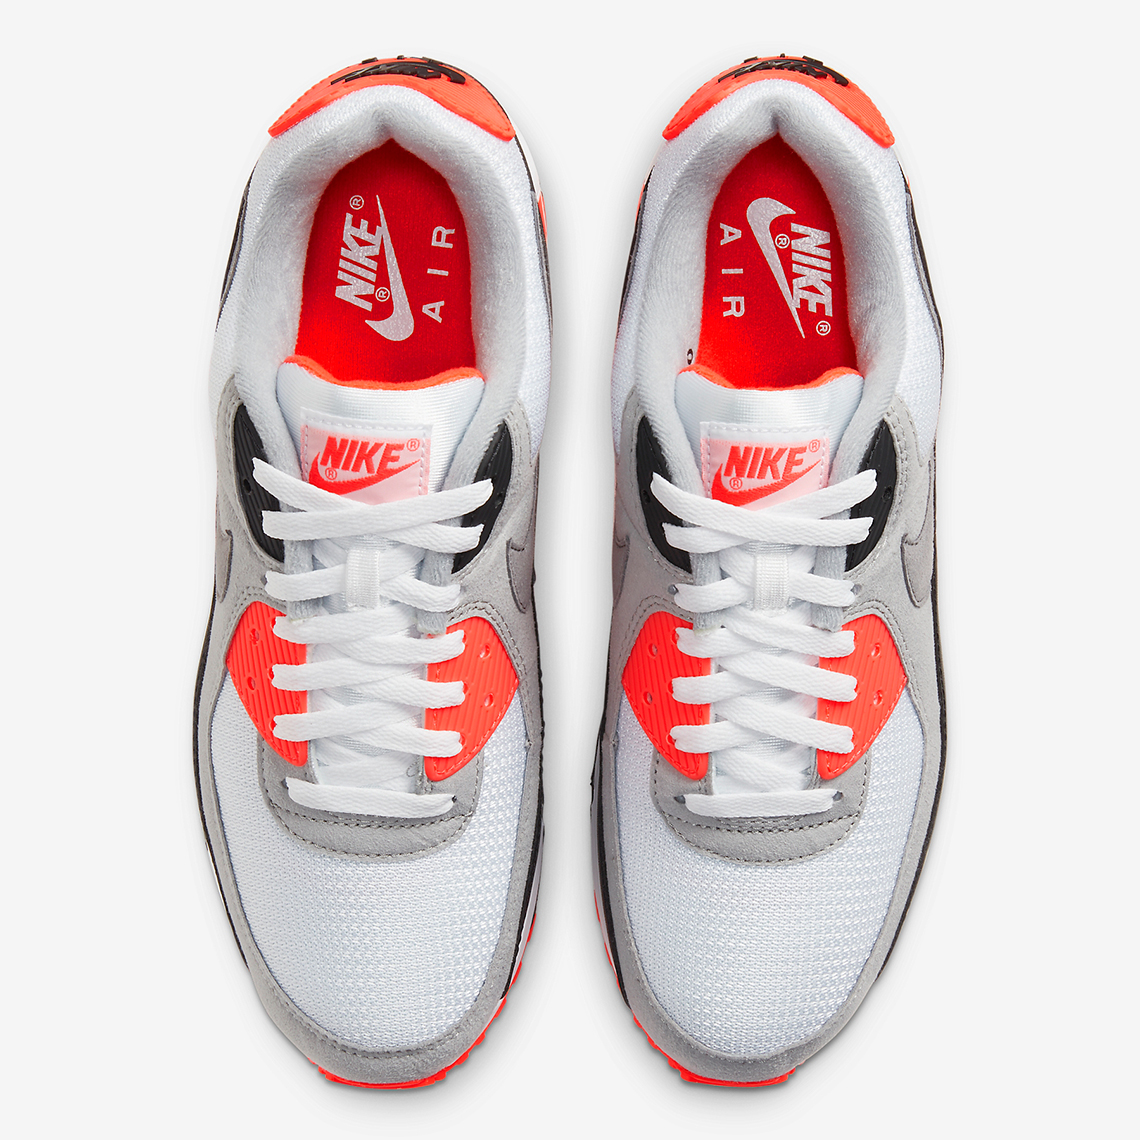 Nike air max 90 infrared 2020